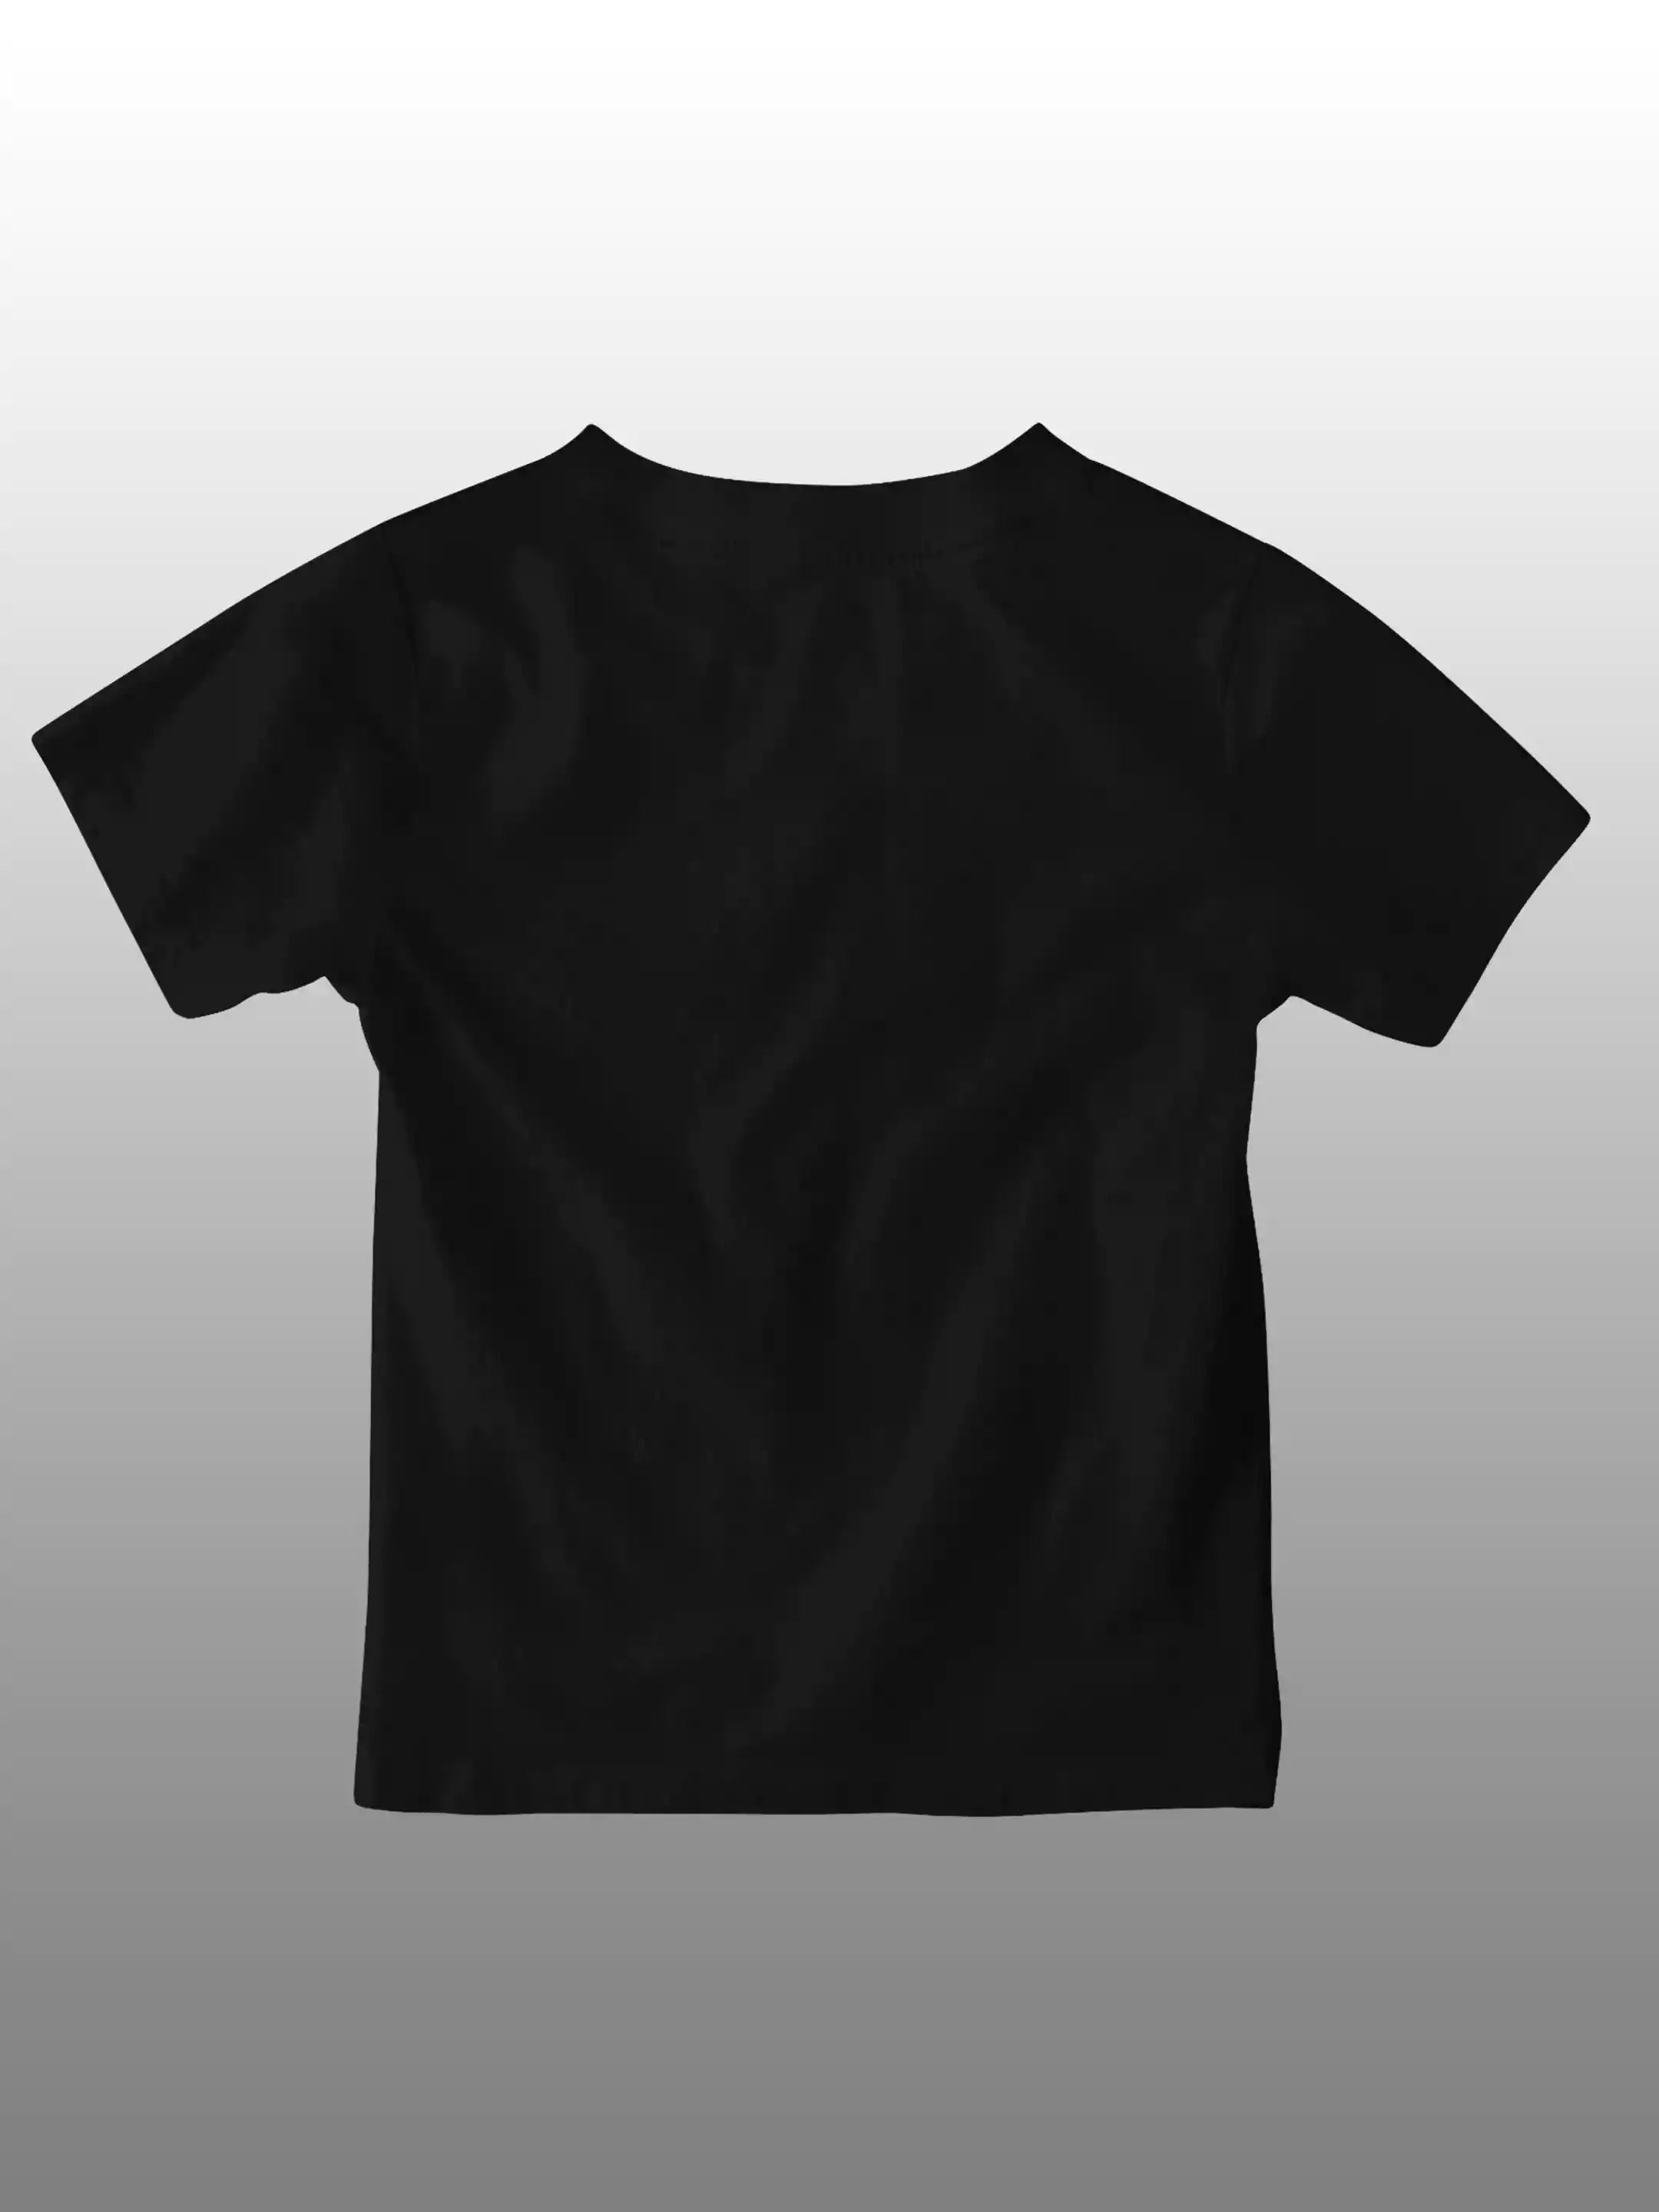 Stay Groovy - Sukhiaatma Unisex Graphic Printed Kids Black T-shirt